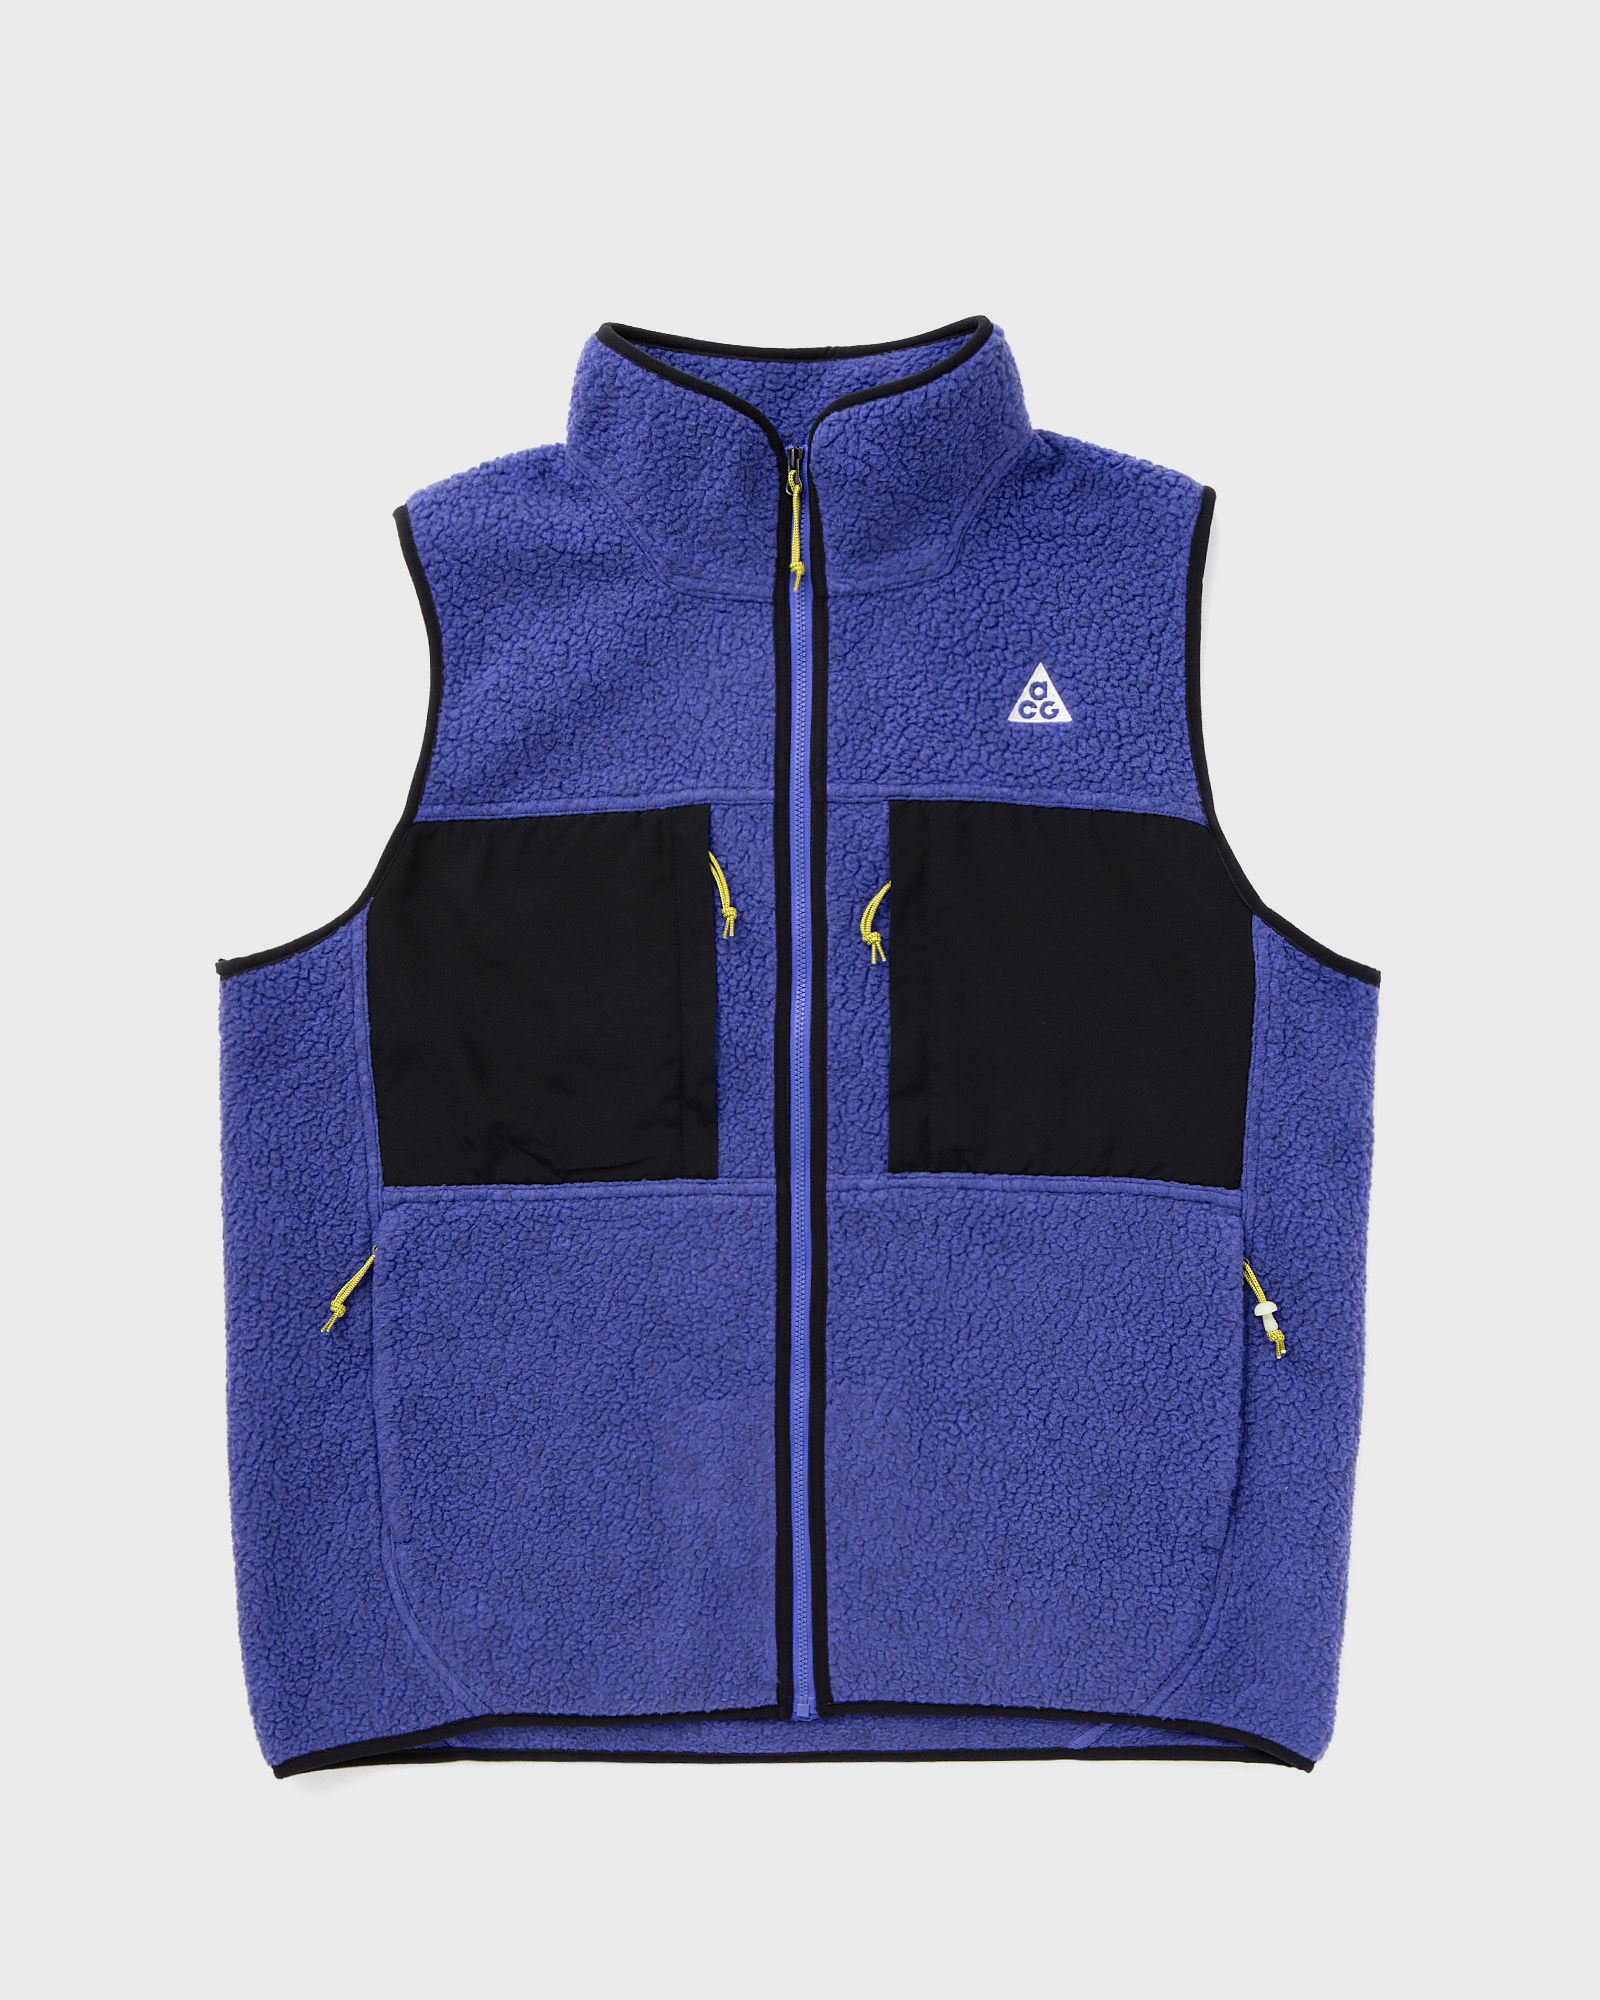 Nike - acg arctic wolf vest men vests purple in größe:xxl